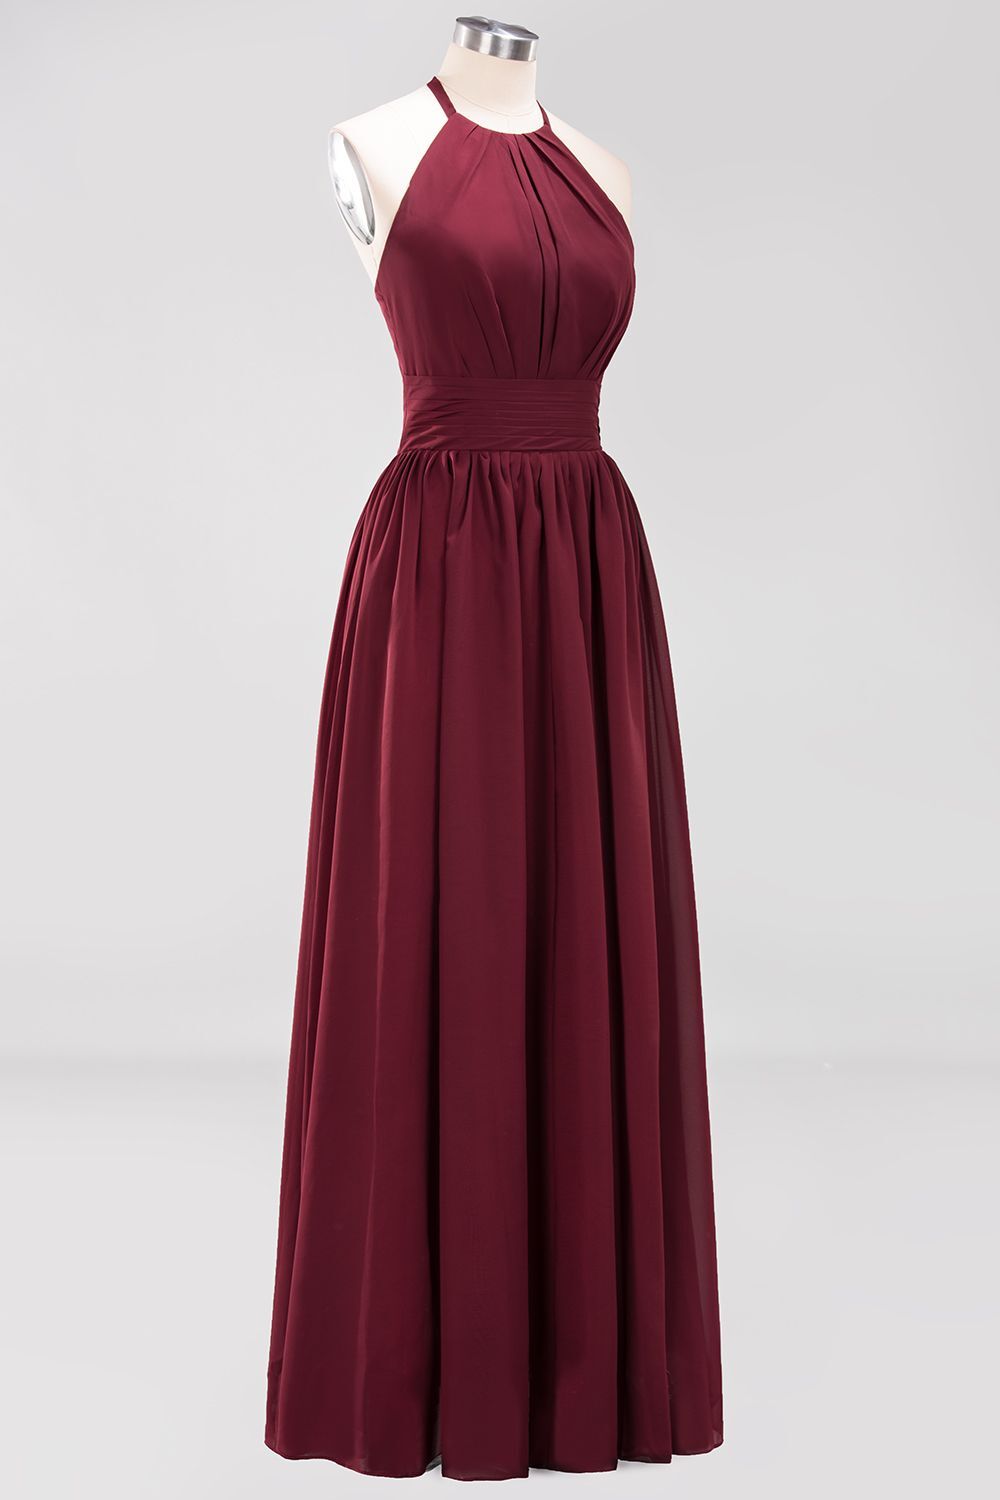 Halter Wine Red Chiffon A-line Long Bridesmaid Dress